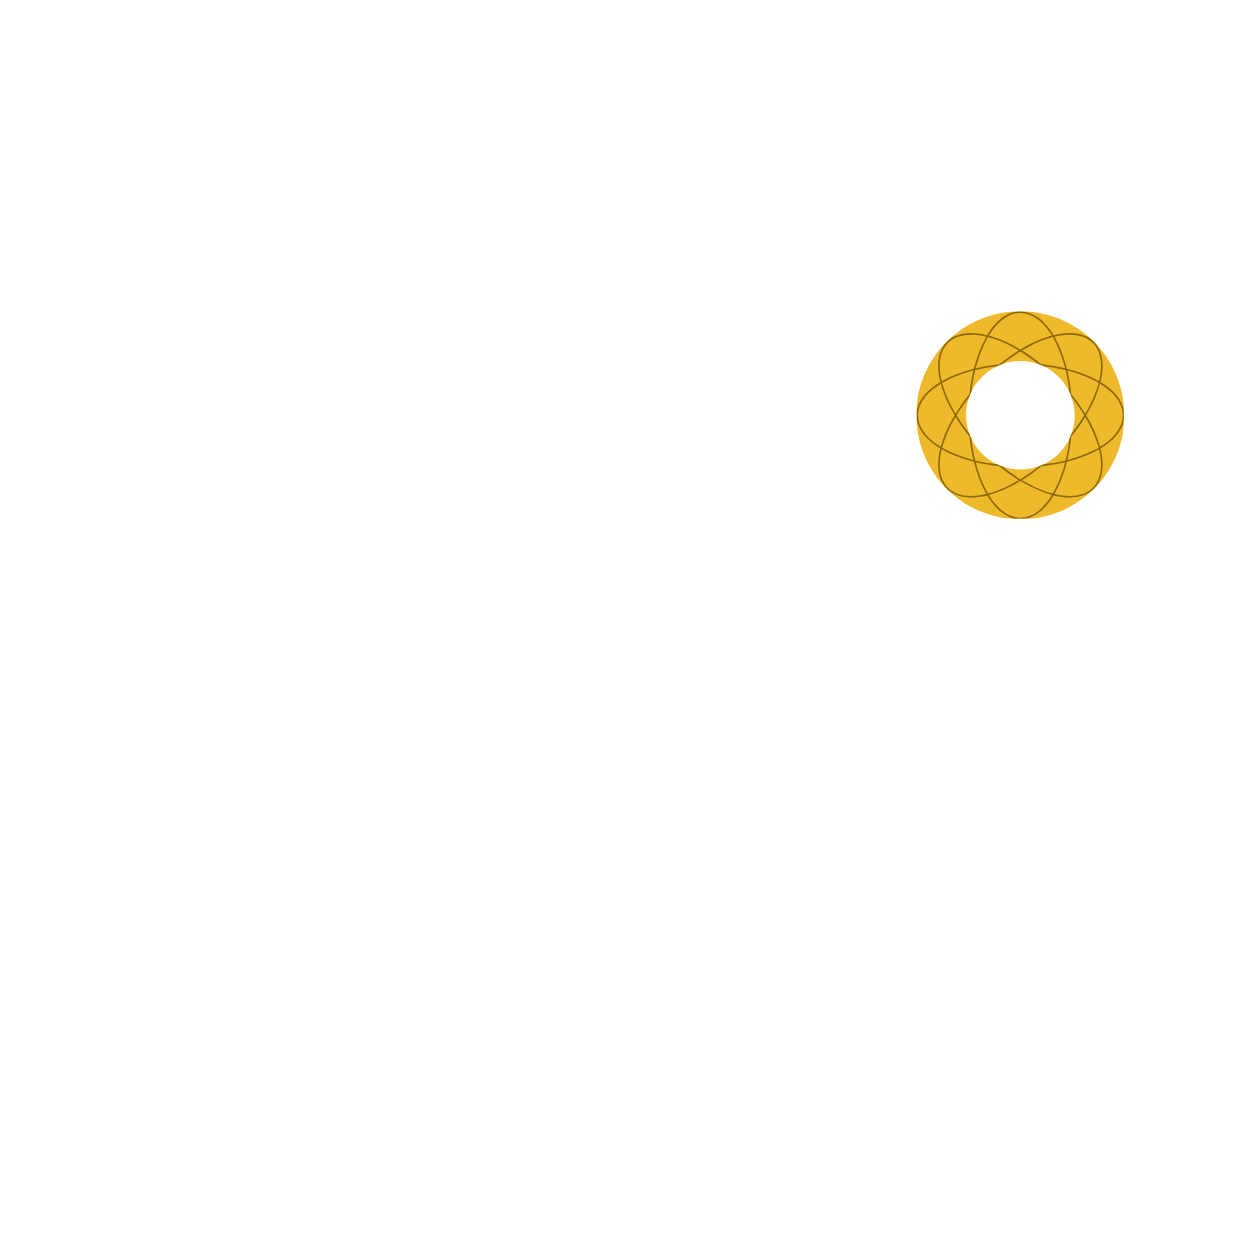 Feinstein Accountancy Firm, Inc. 